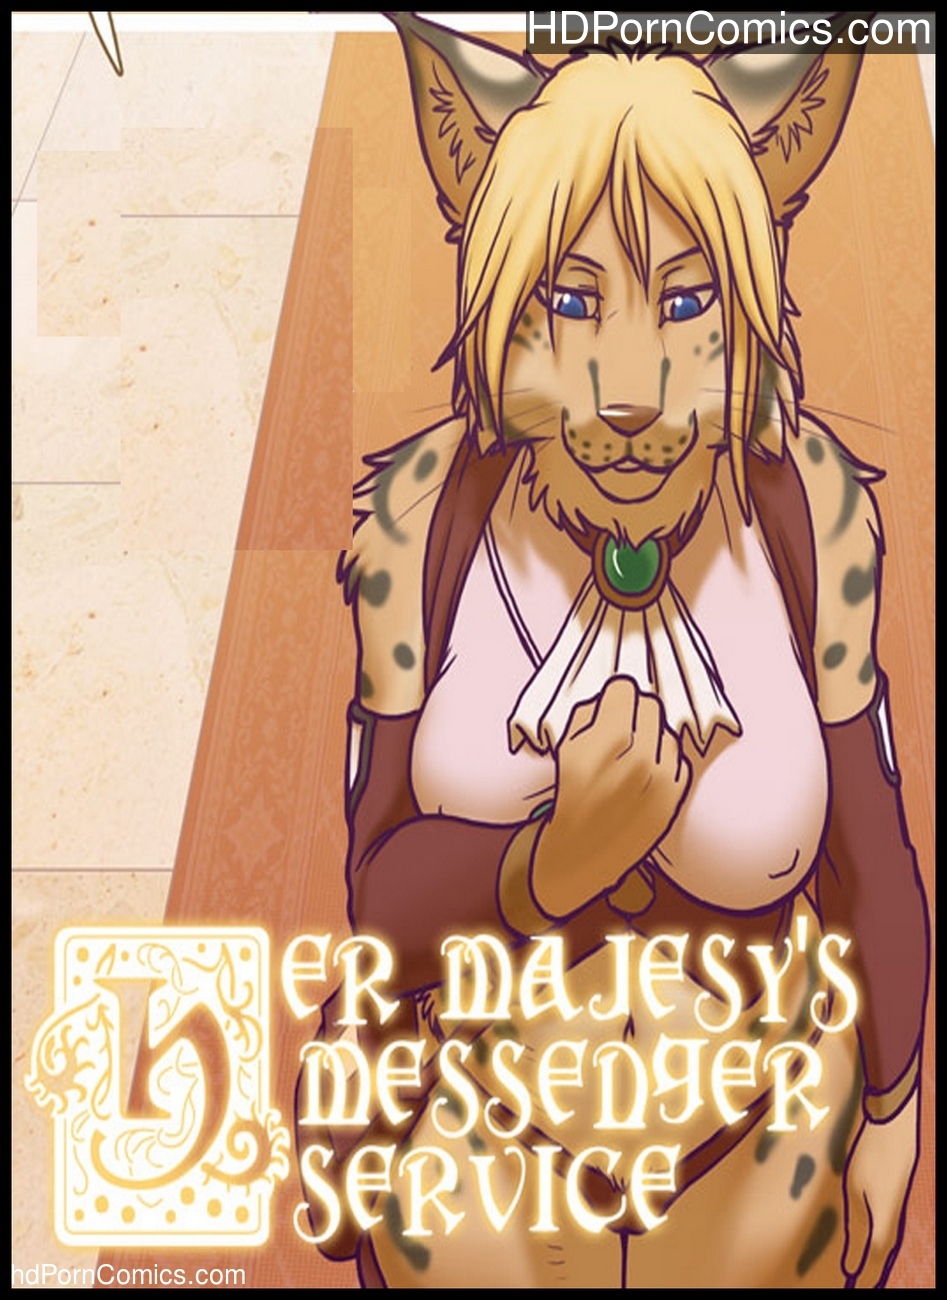 Her Majesty's Messenger Service Sex Comic - HD Porn Comics